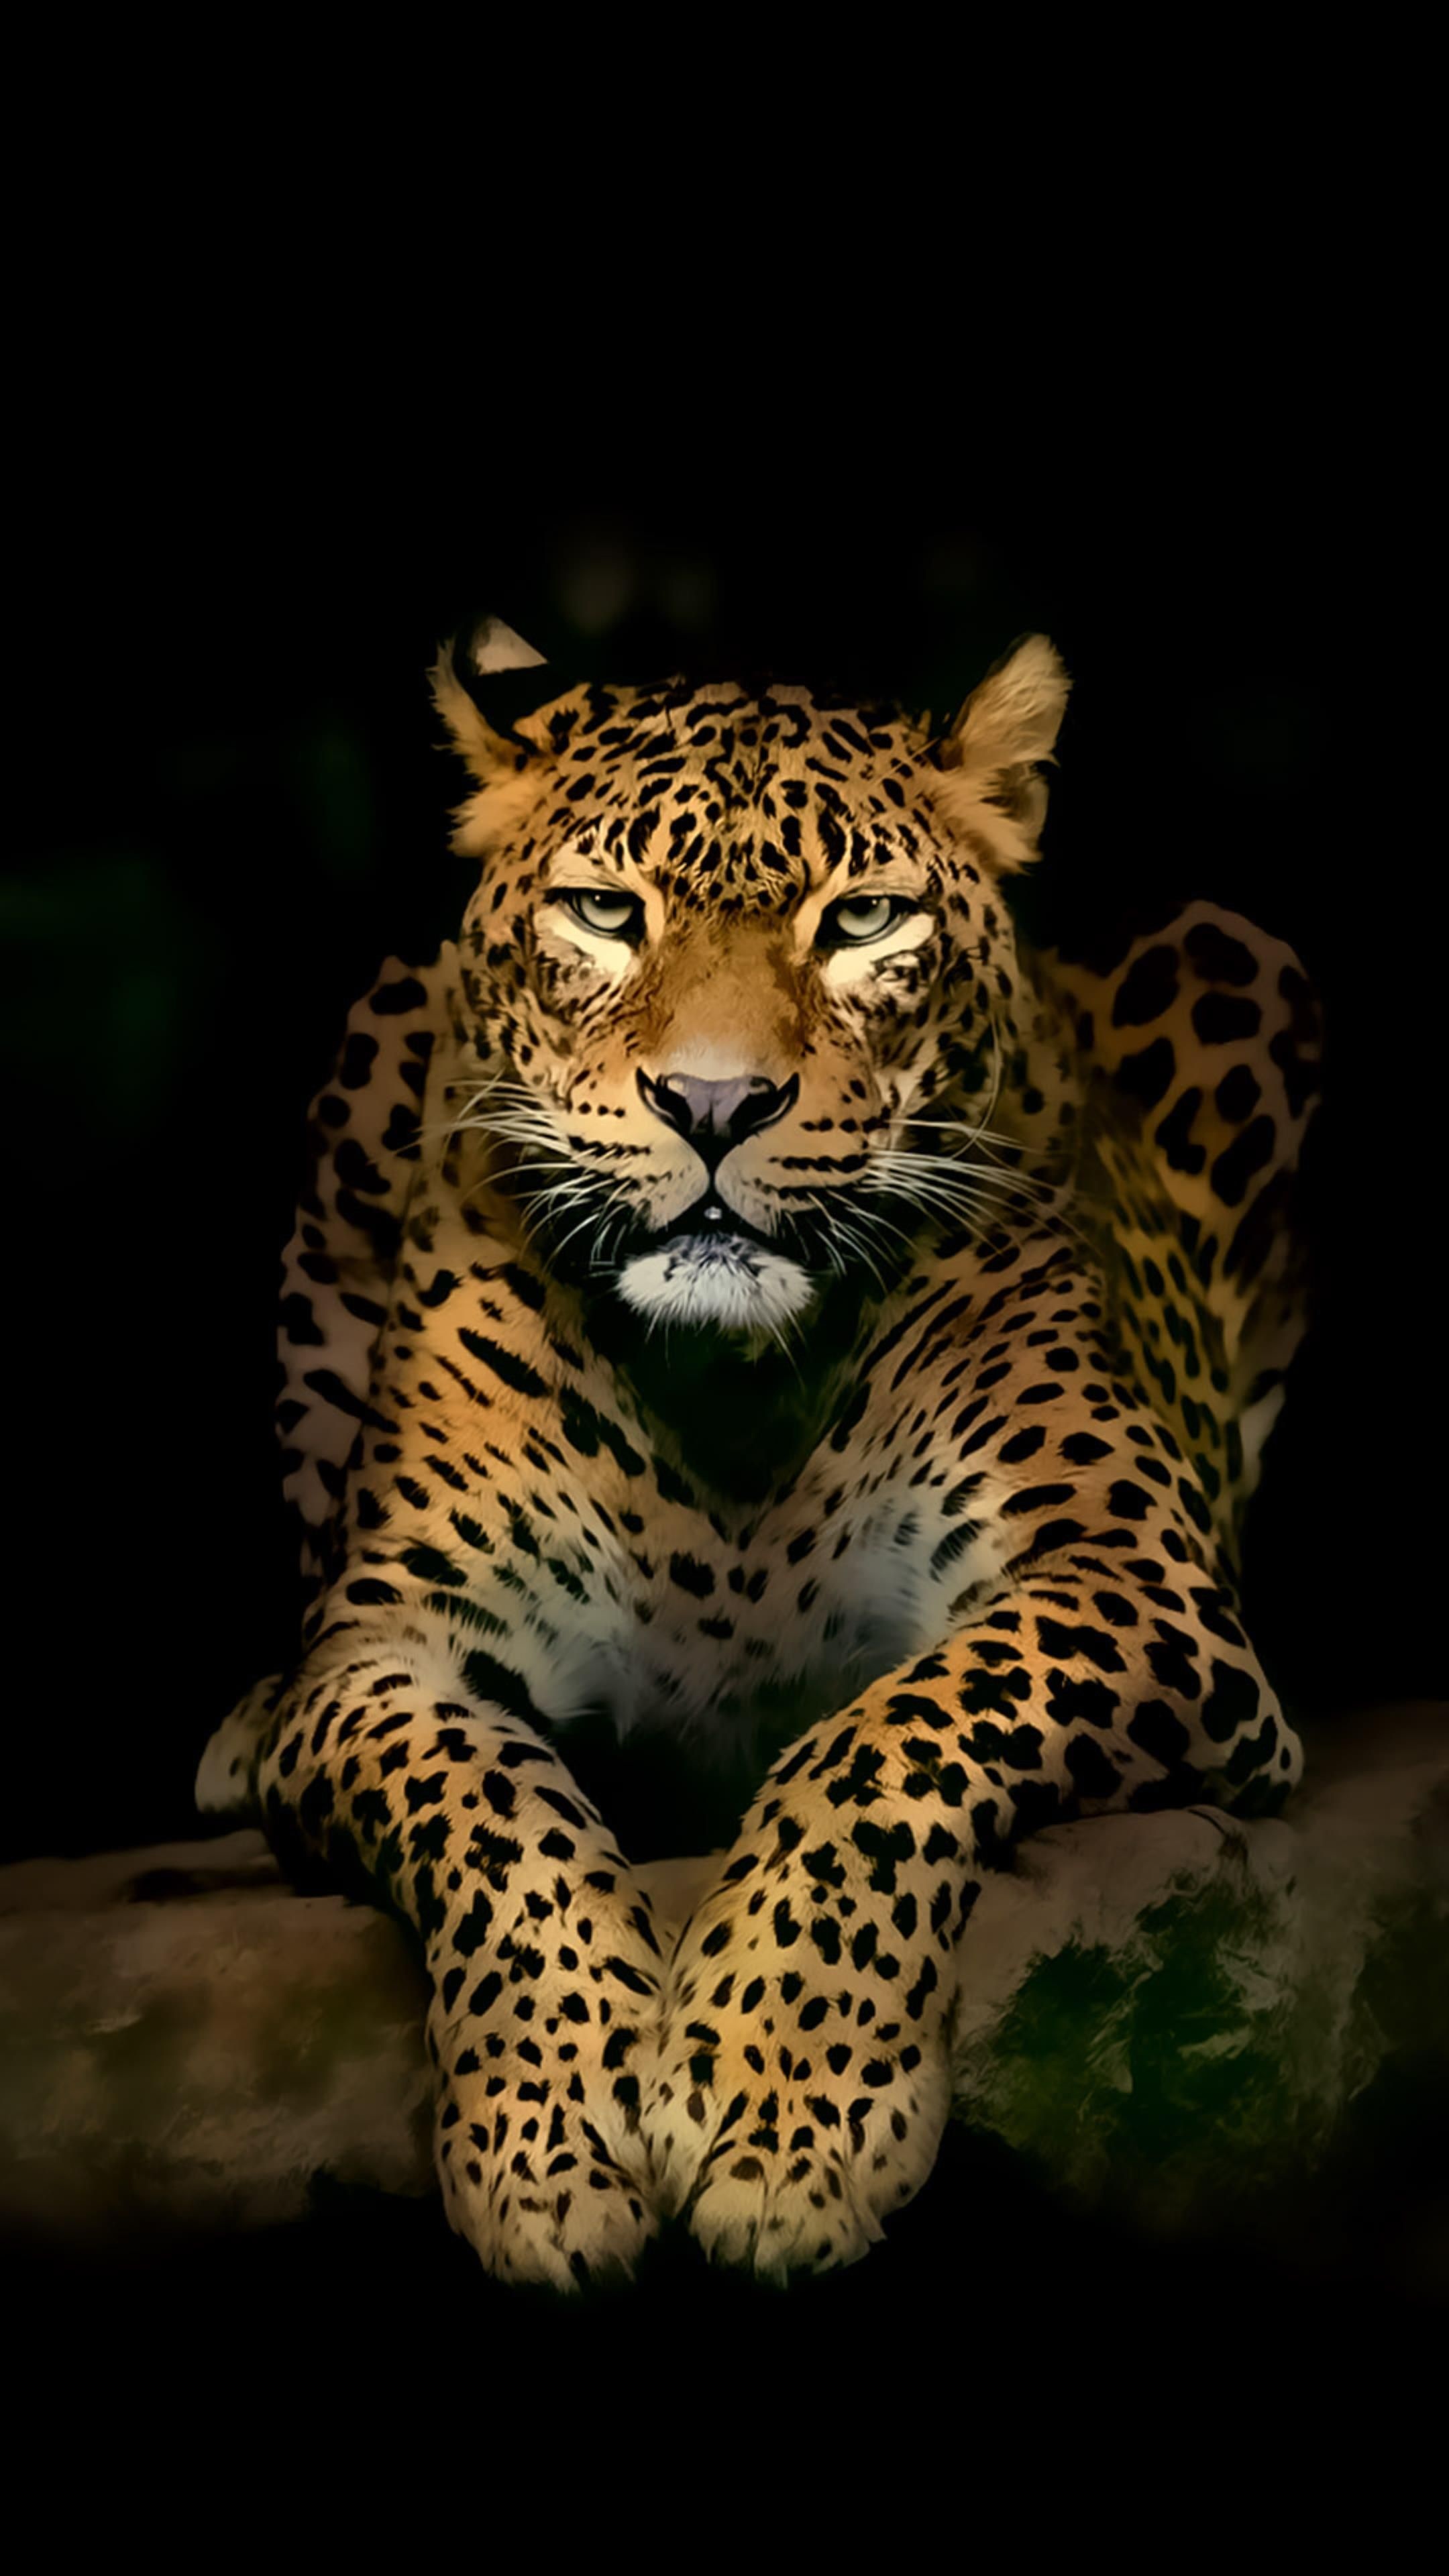 Jungle Animal, Wild animal wallpaper, Jaguar's charm, Adorable wildlife moments, 2160x3840 4K Phone